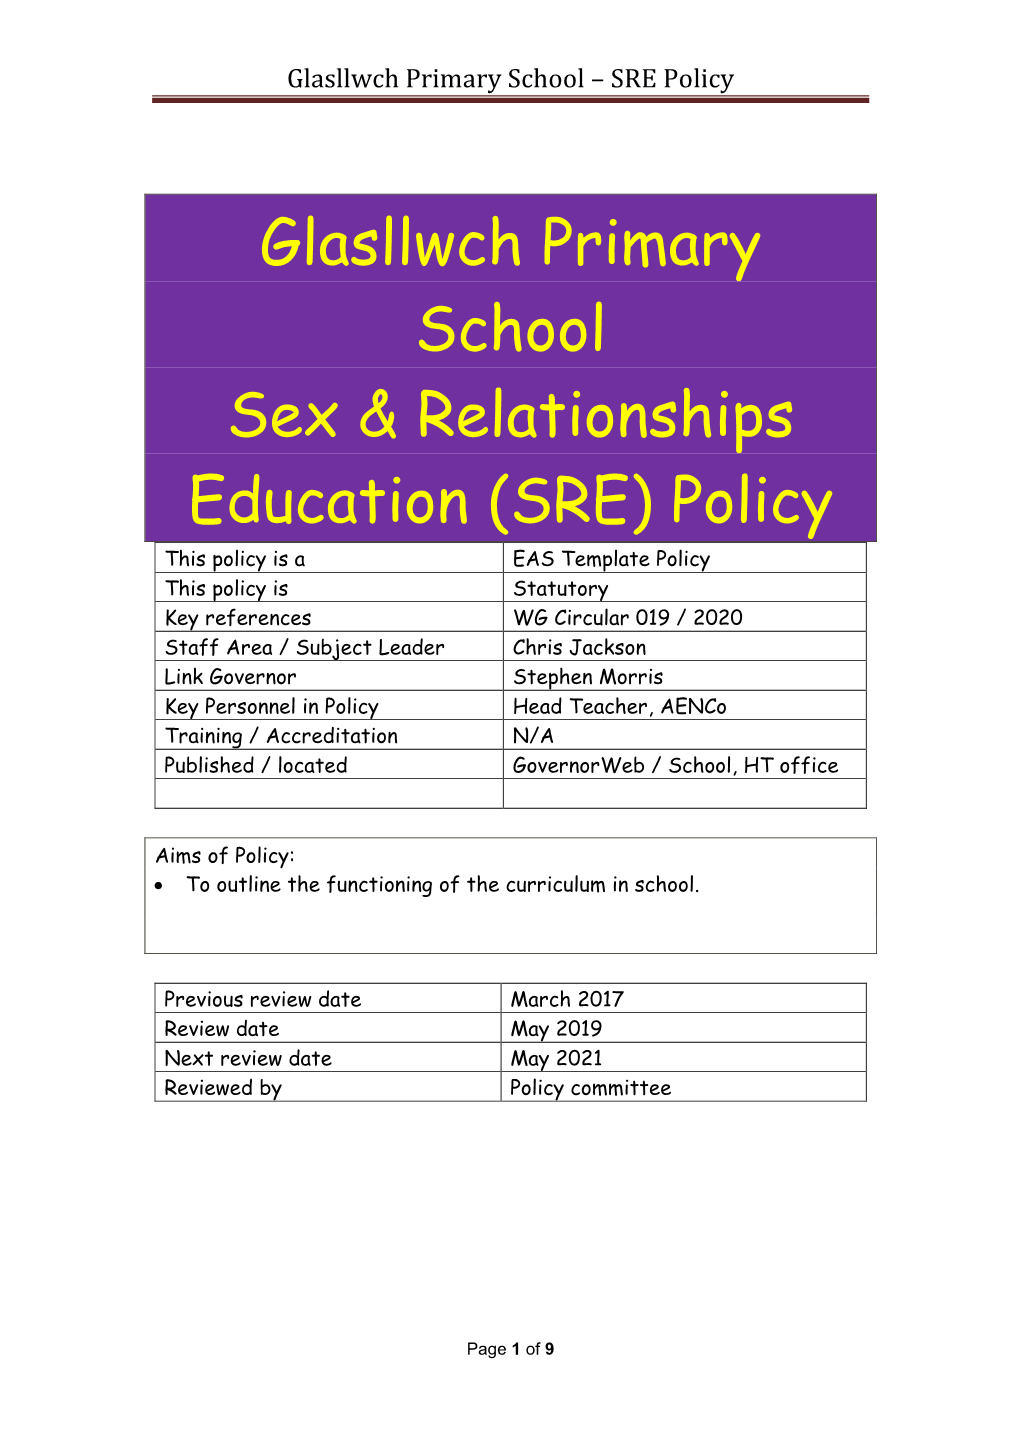 Glasllwch Primary School Sex & Relationships Education (SRE) Policy